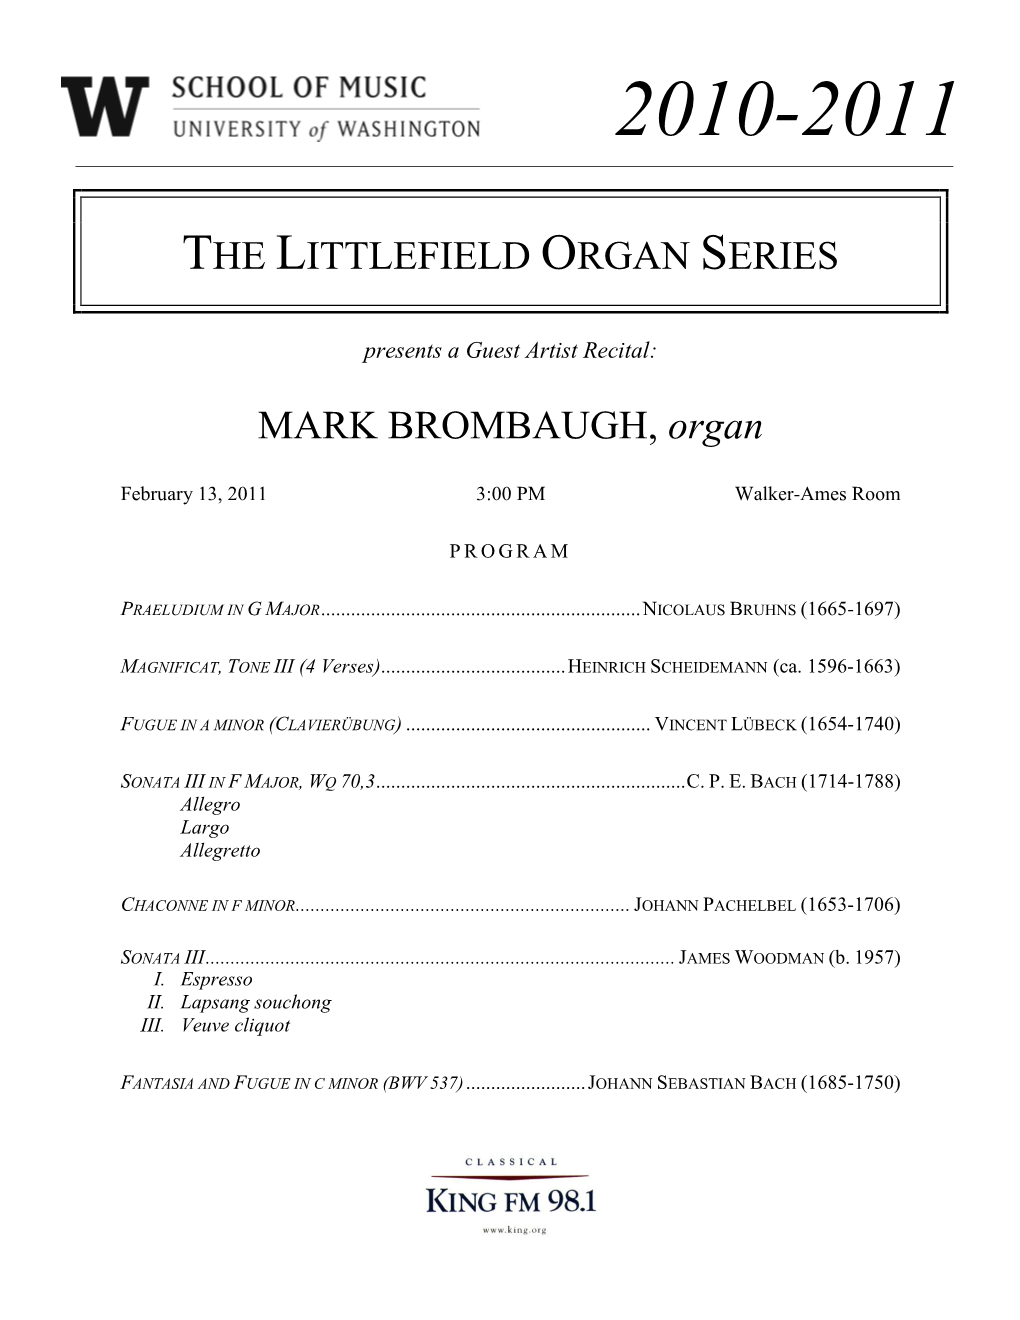 THE LITTLEFIELD ORGAN SERIES MARK BROMBAUGH, Organ